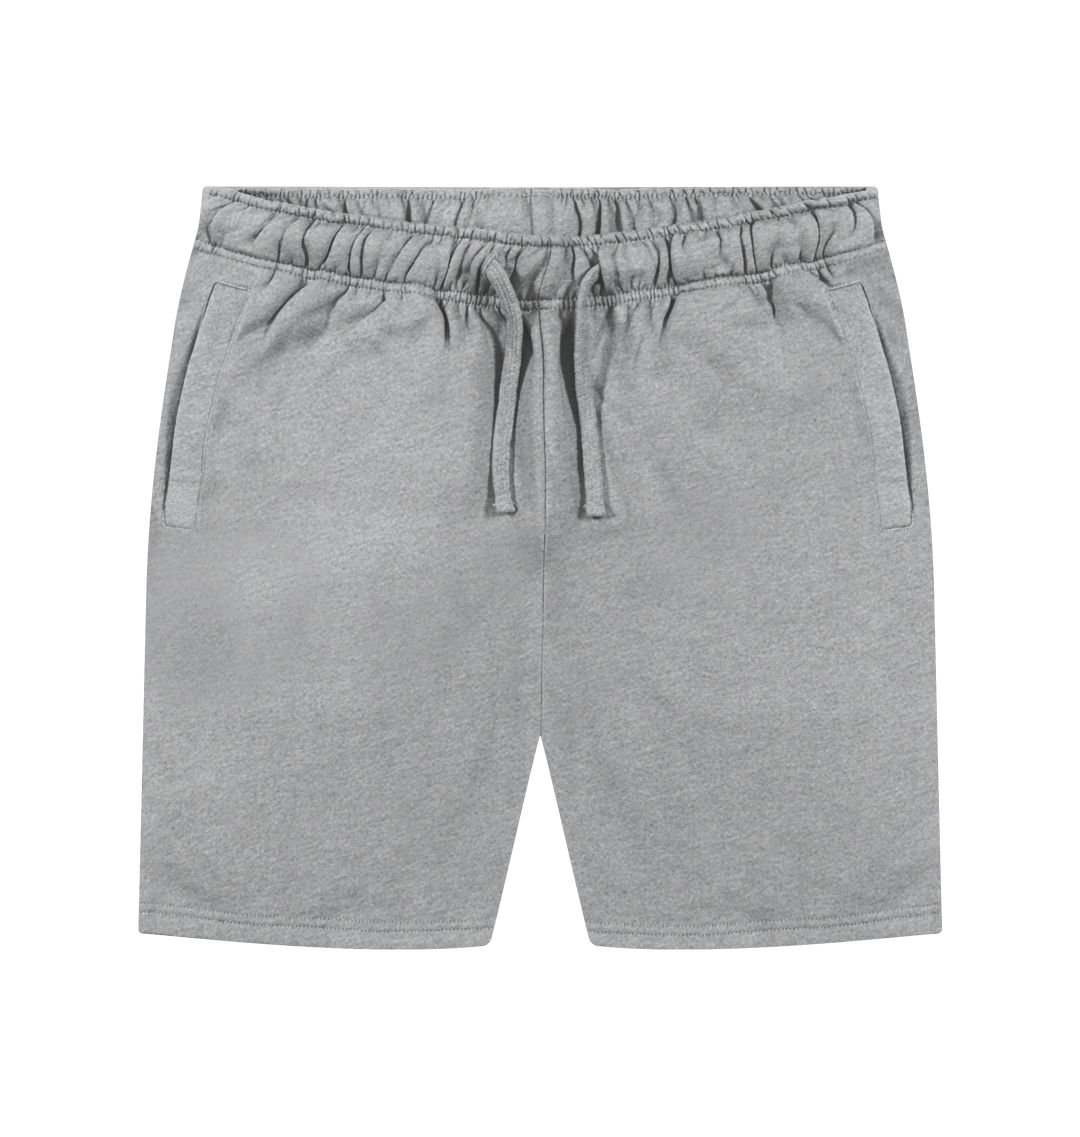 Athletic Grey Men's organic cotton shorts